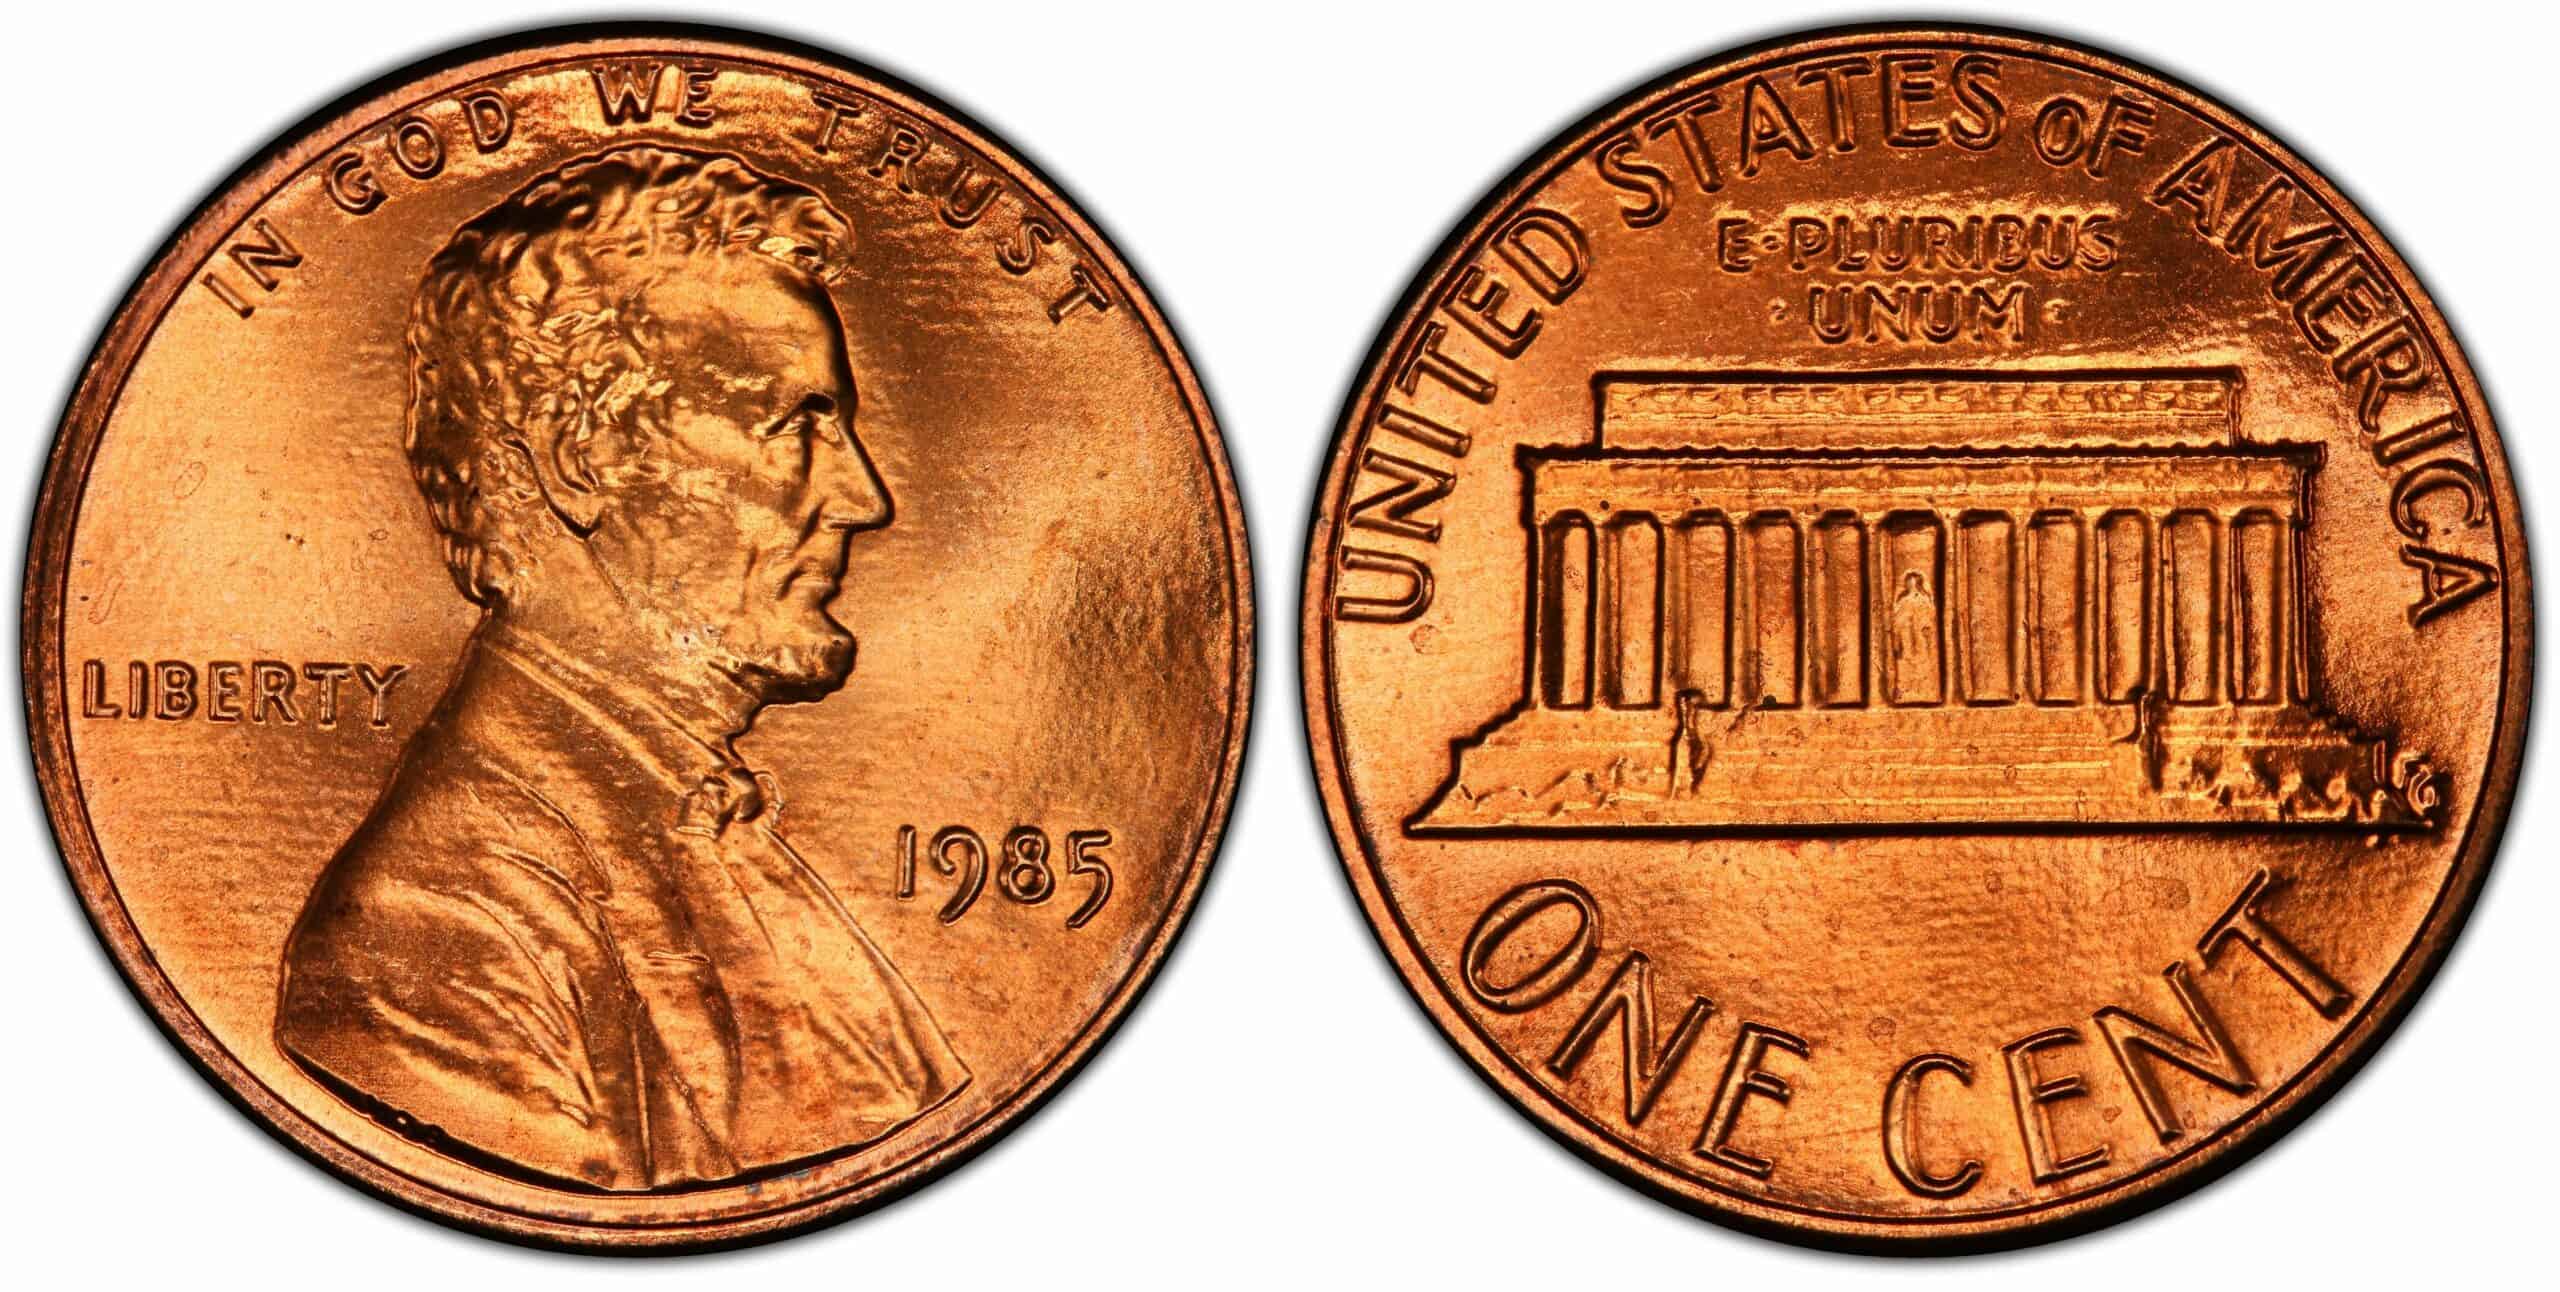 1985 Penny Details